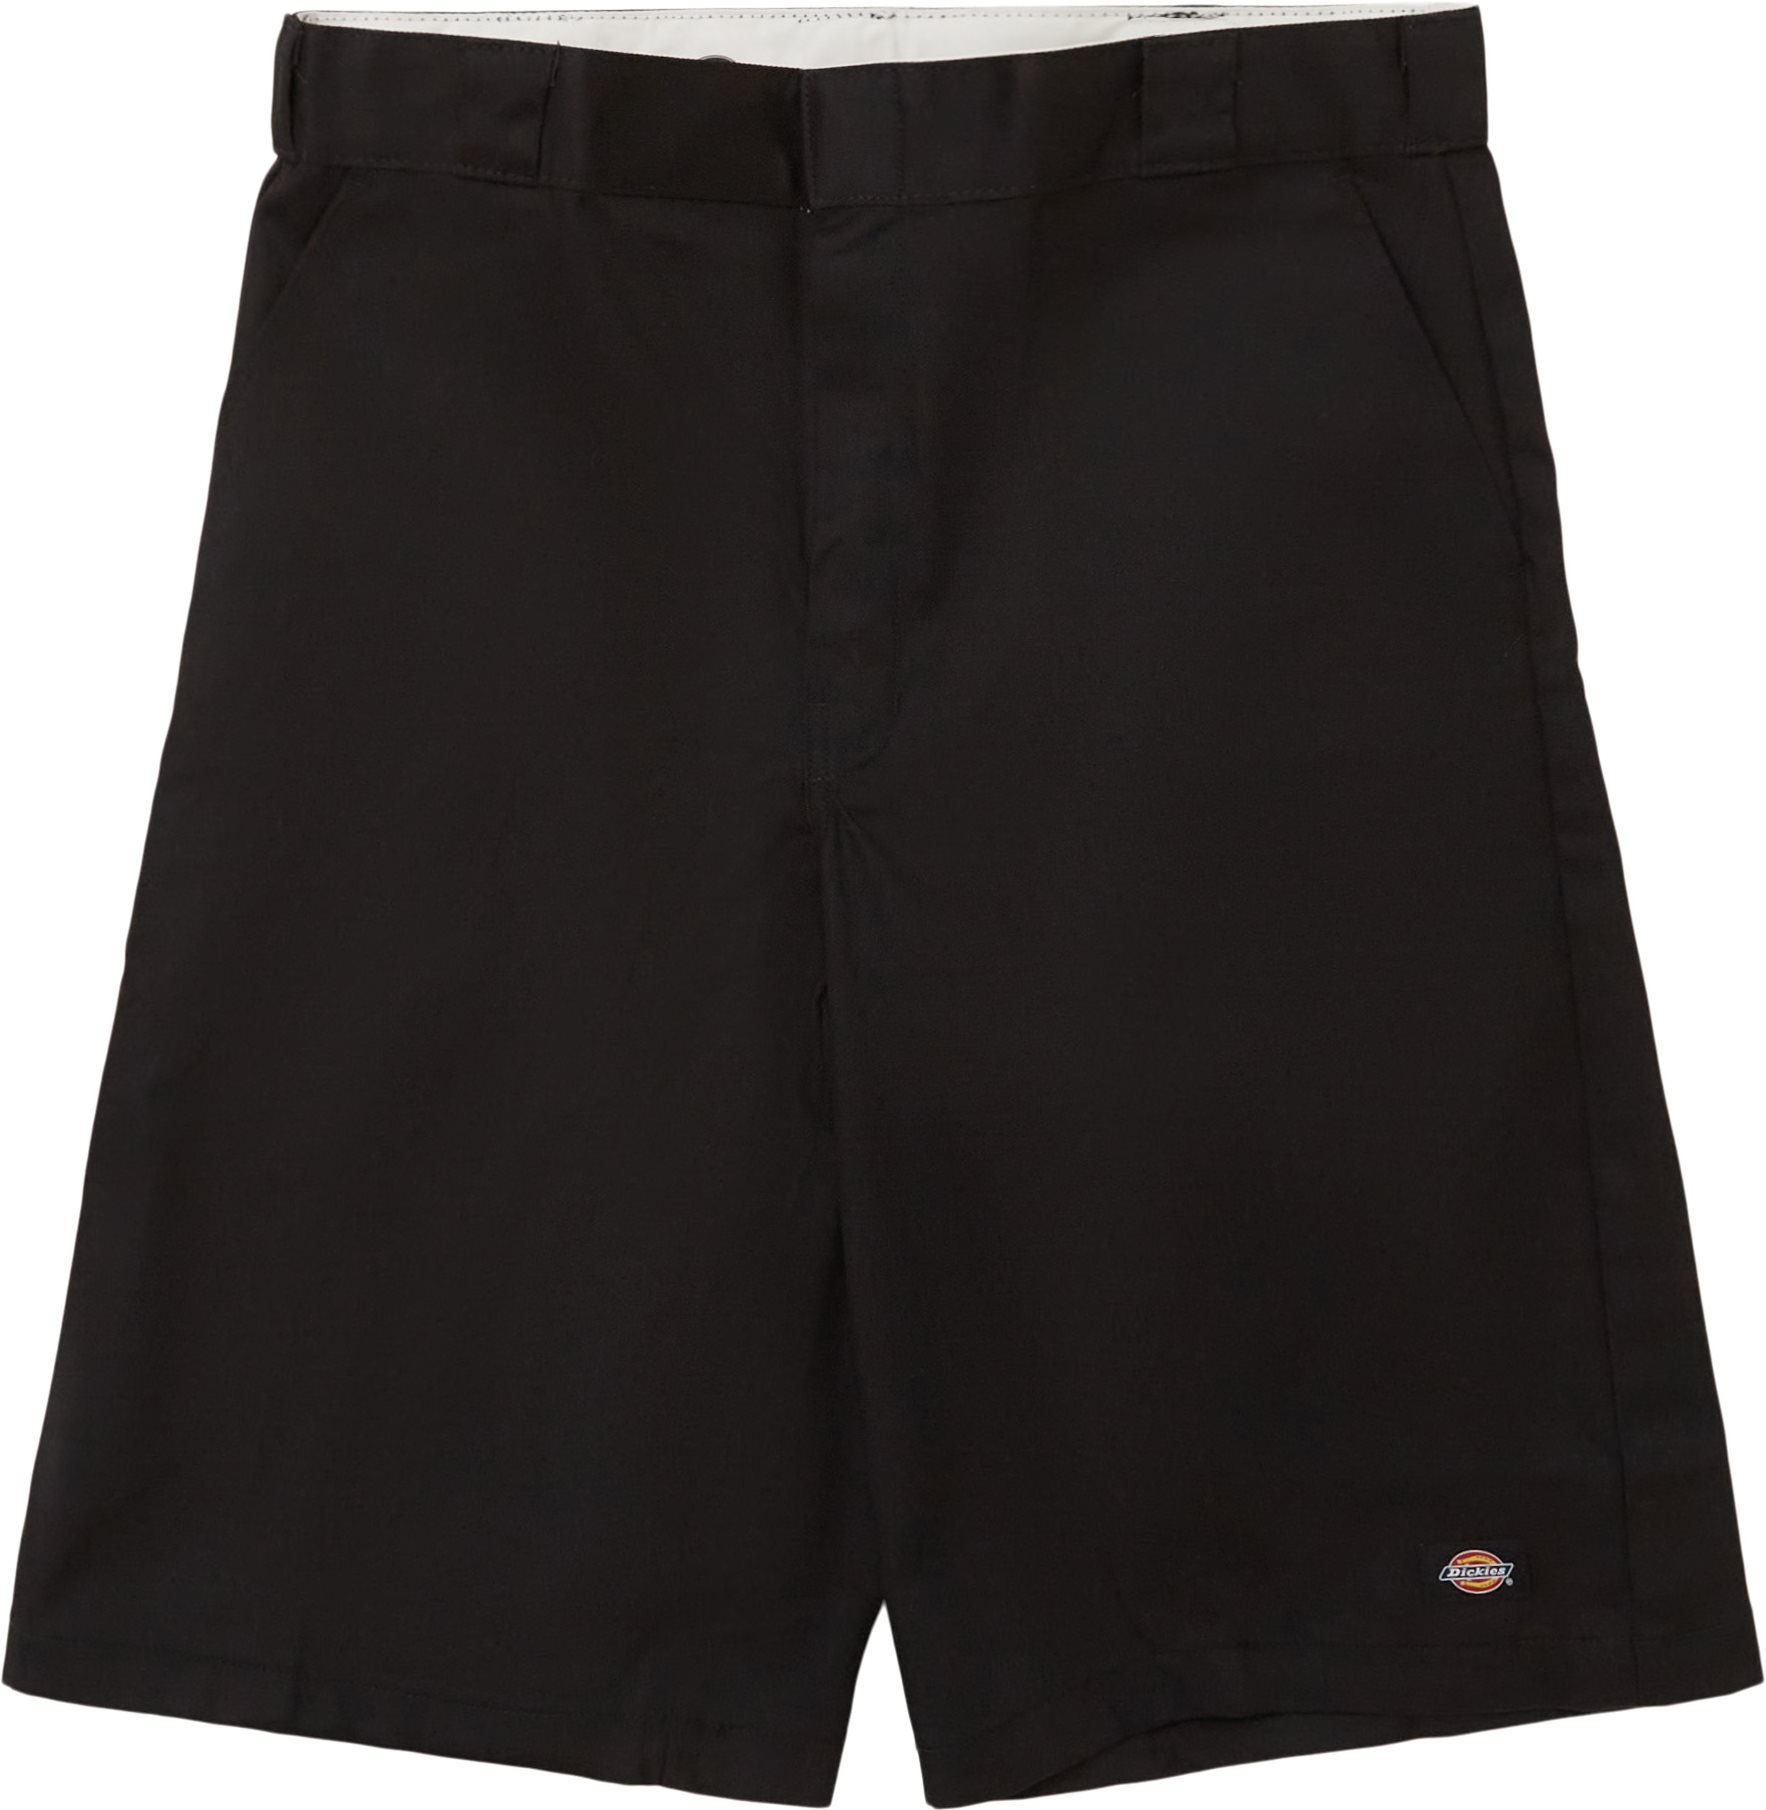 13 Work Shorts - Shorts - Regular fit - Sort